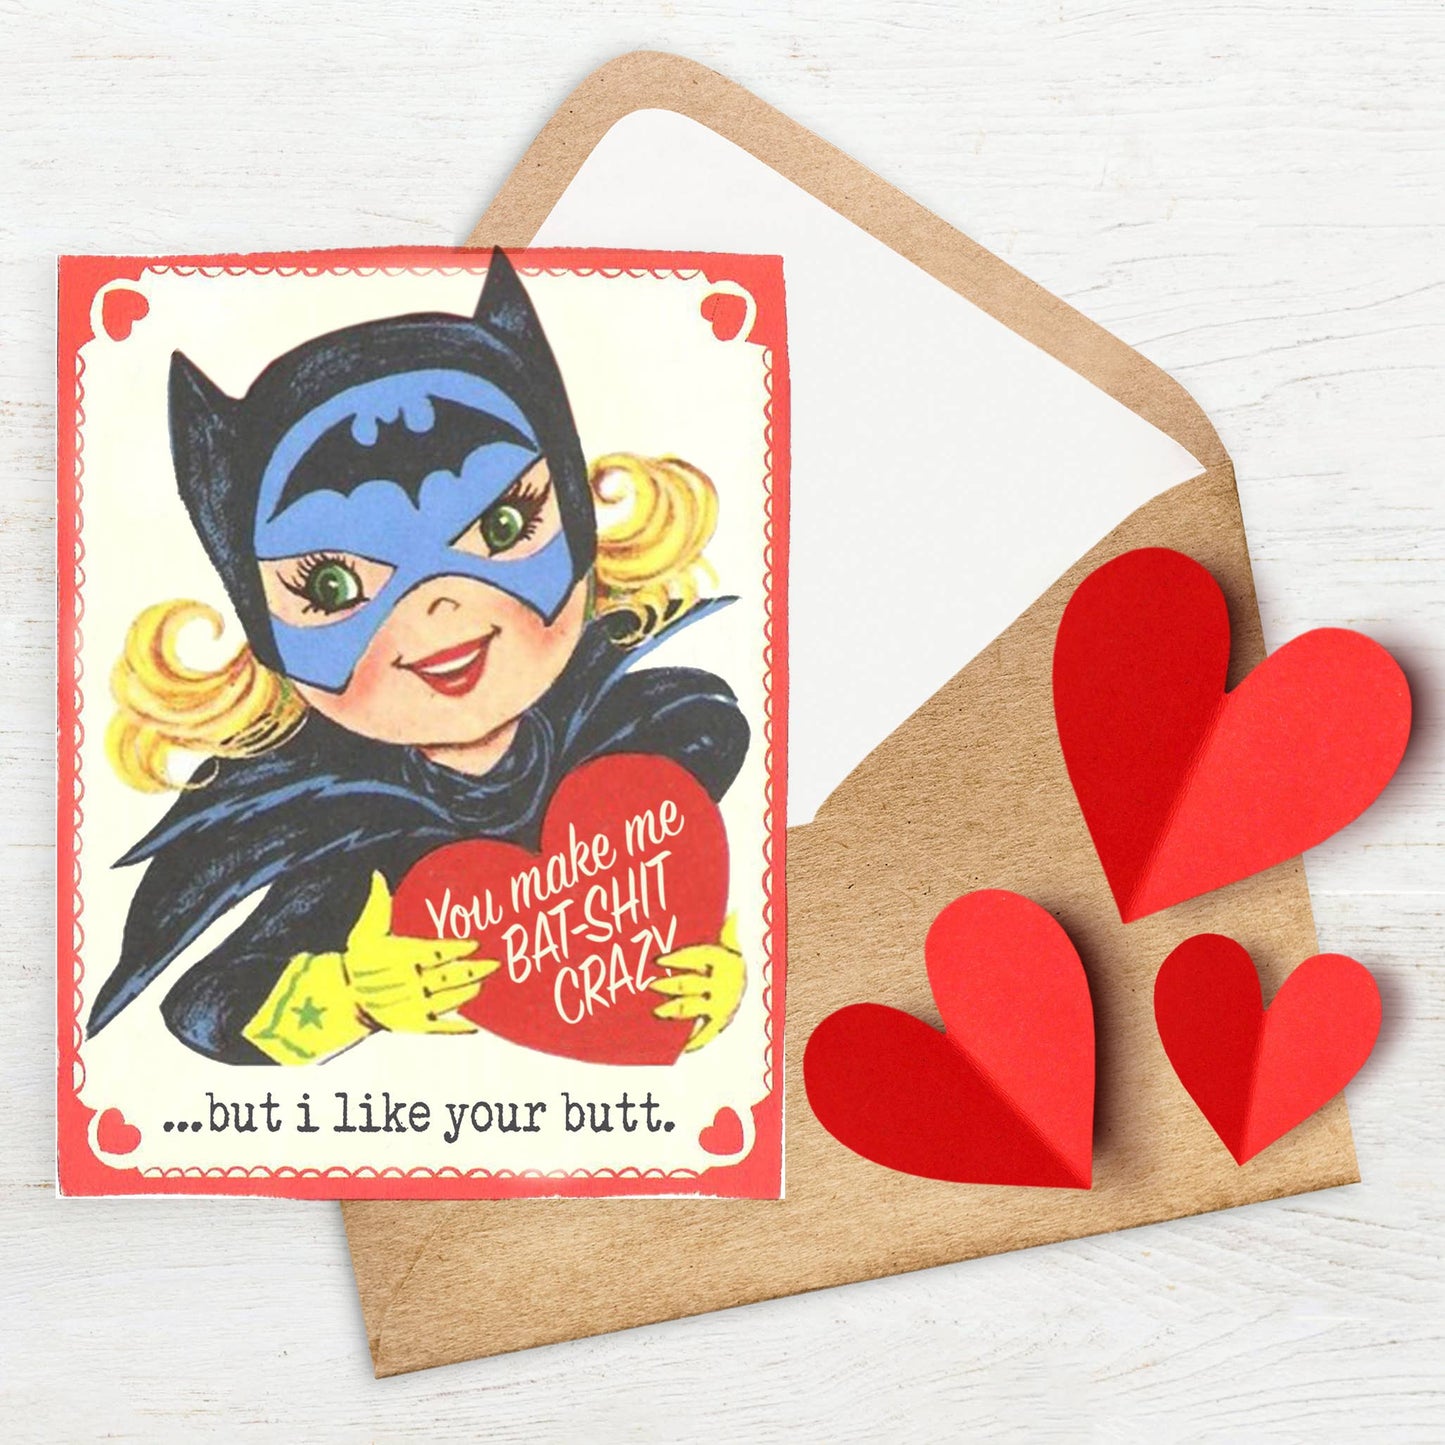 VALENTINE'S DAY: "You Make Me Bat-Shit Crazy" notecard